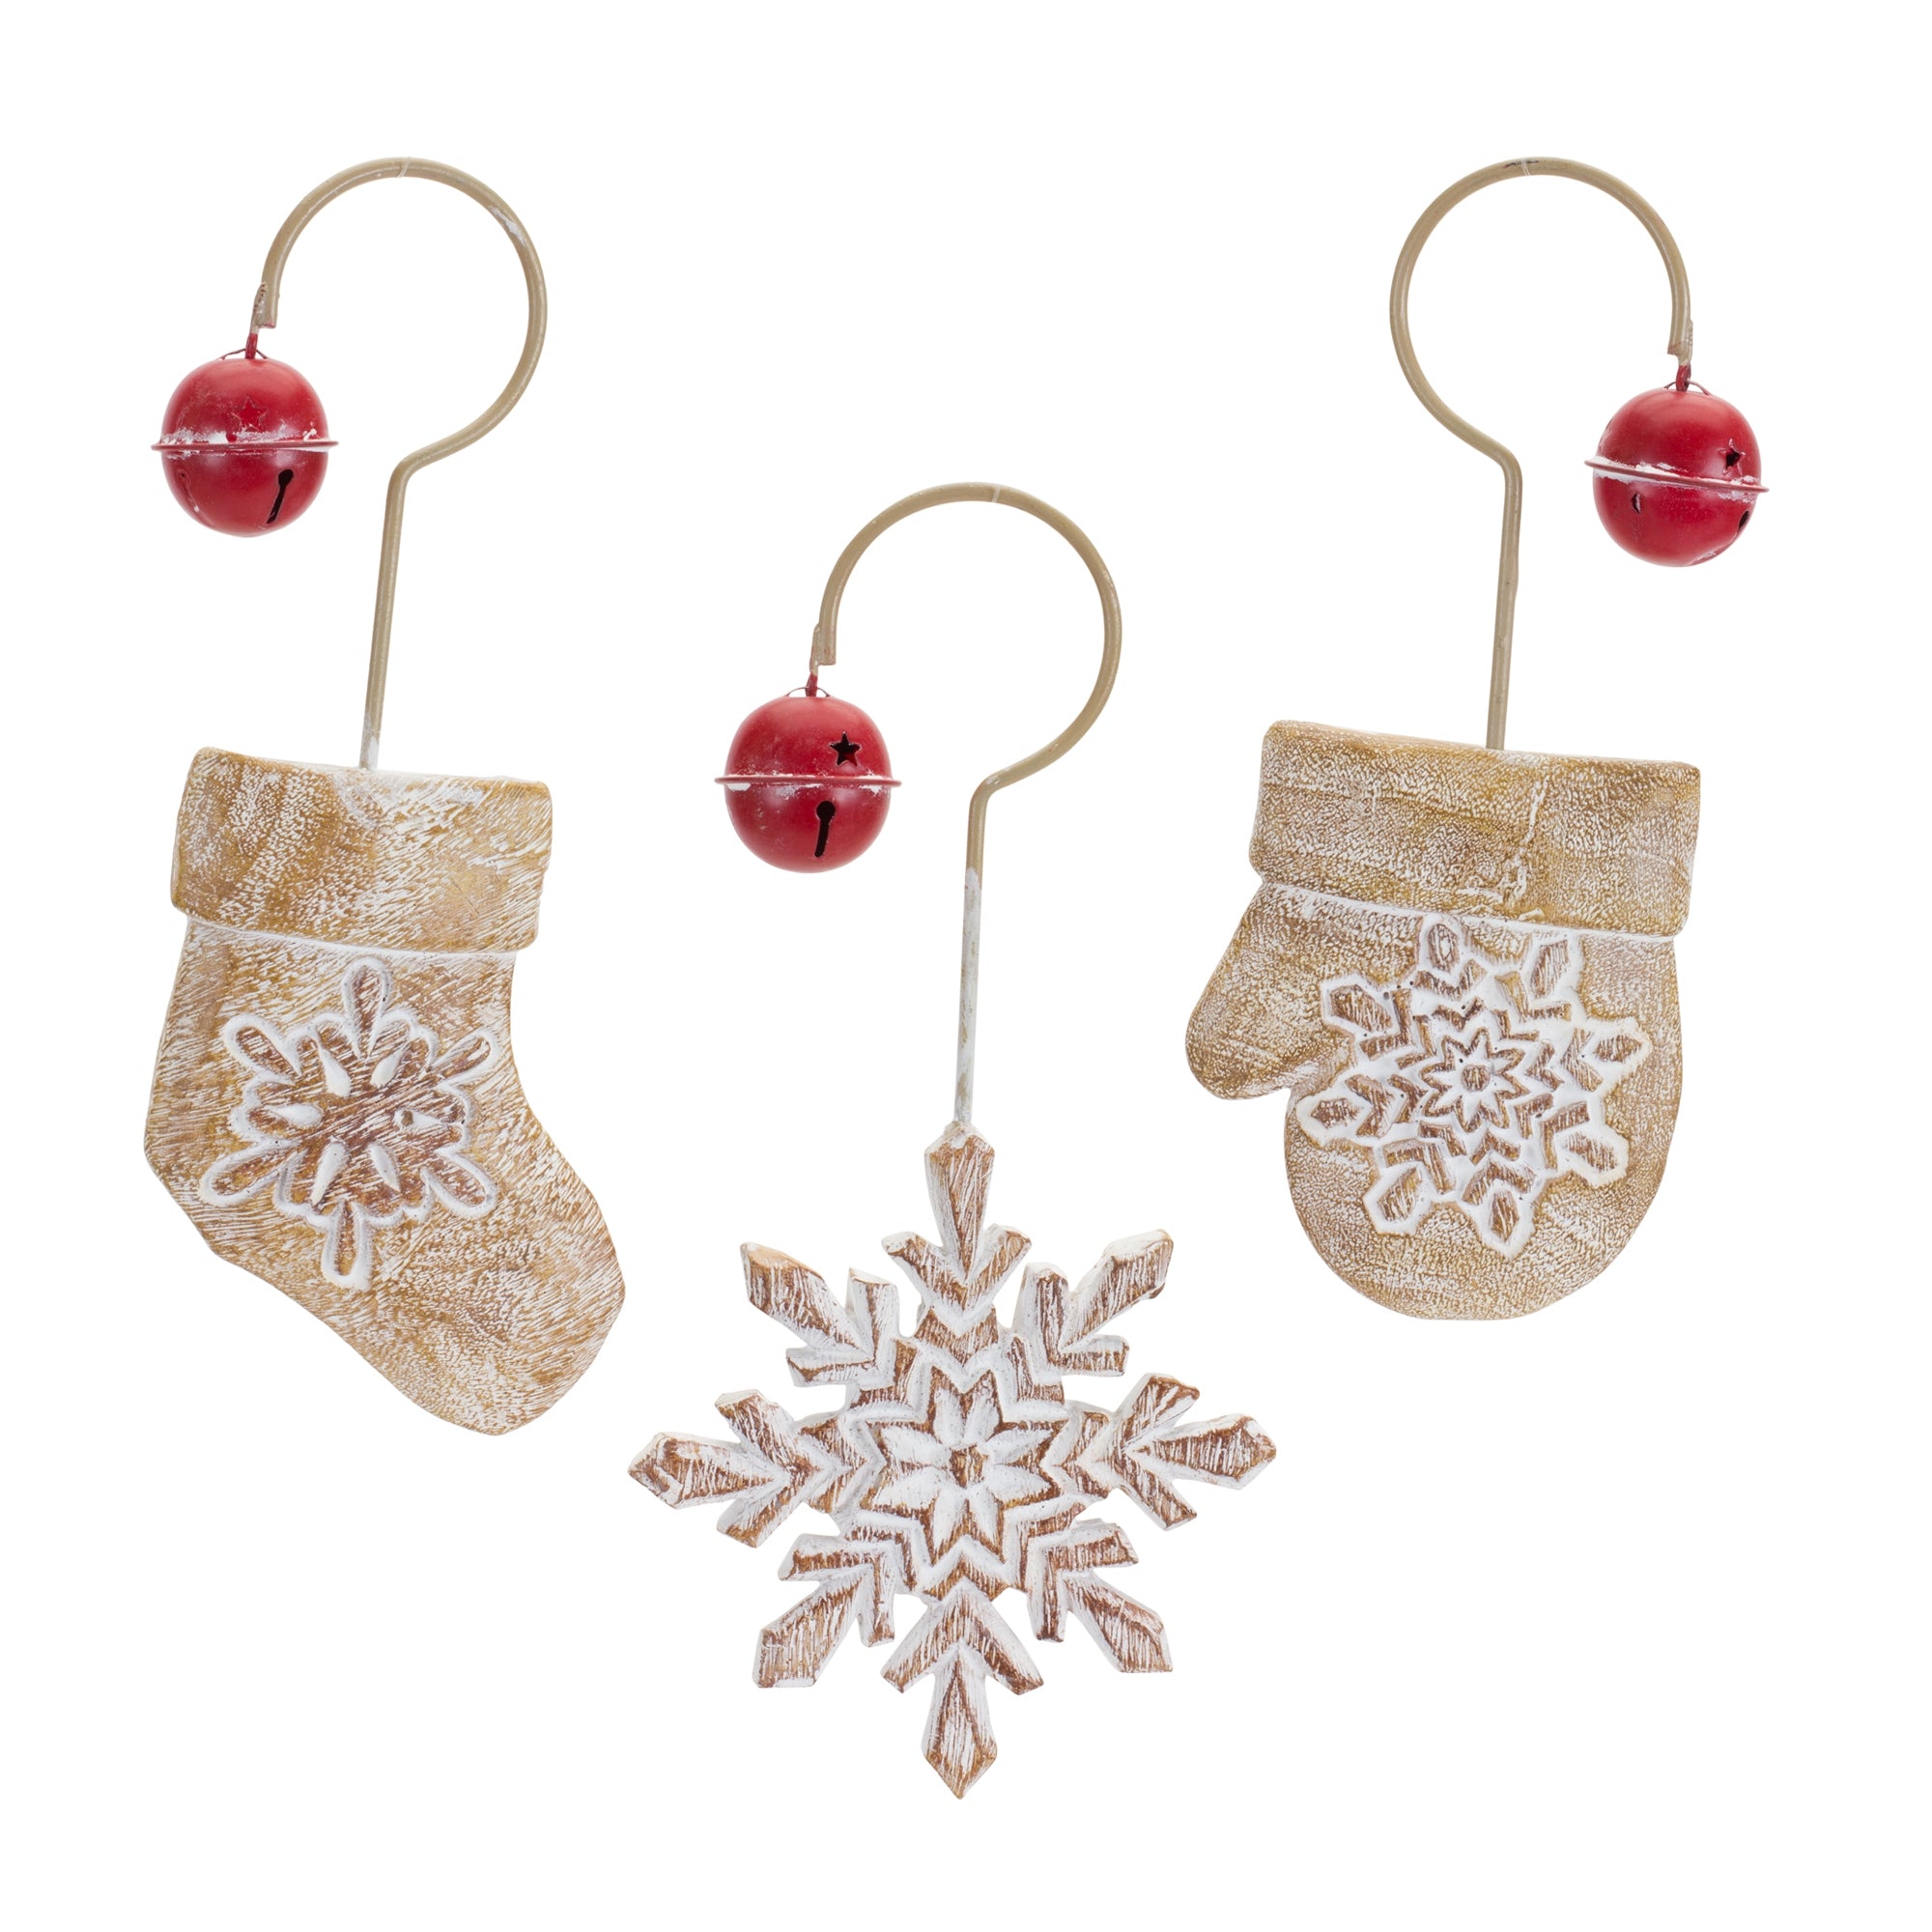 Stocking/Mitten/Snowflake Ornament